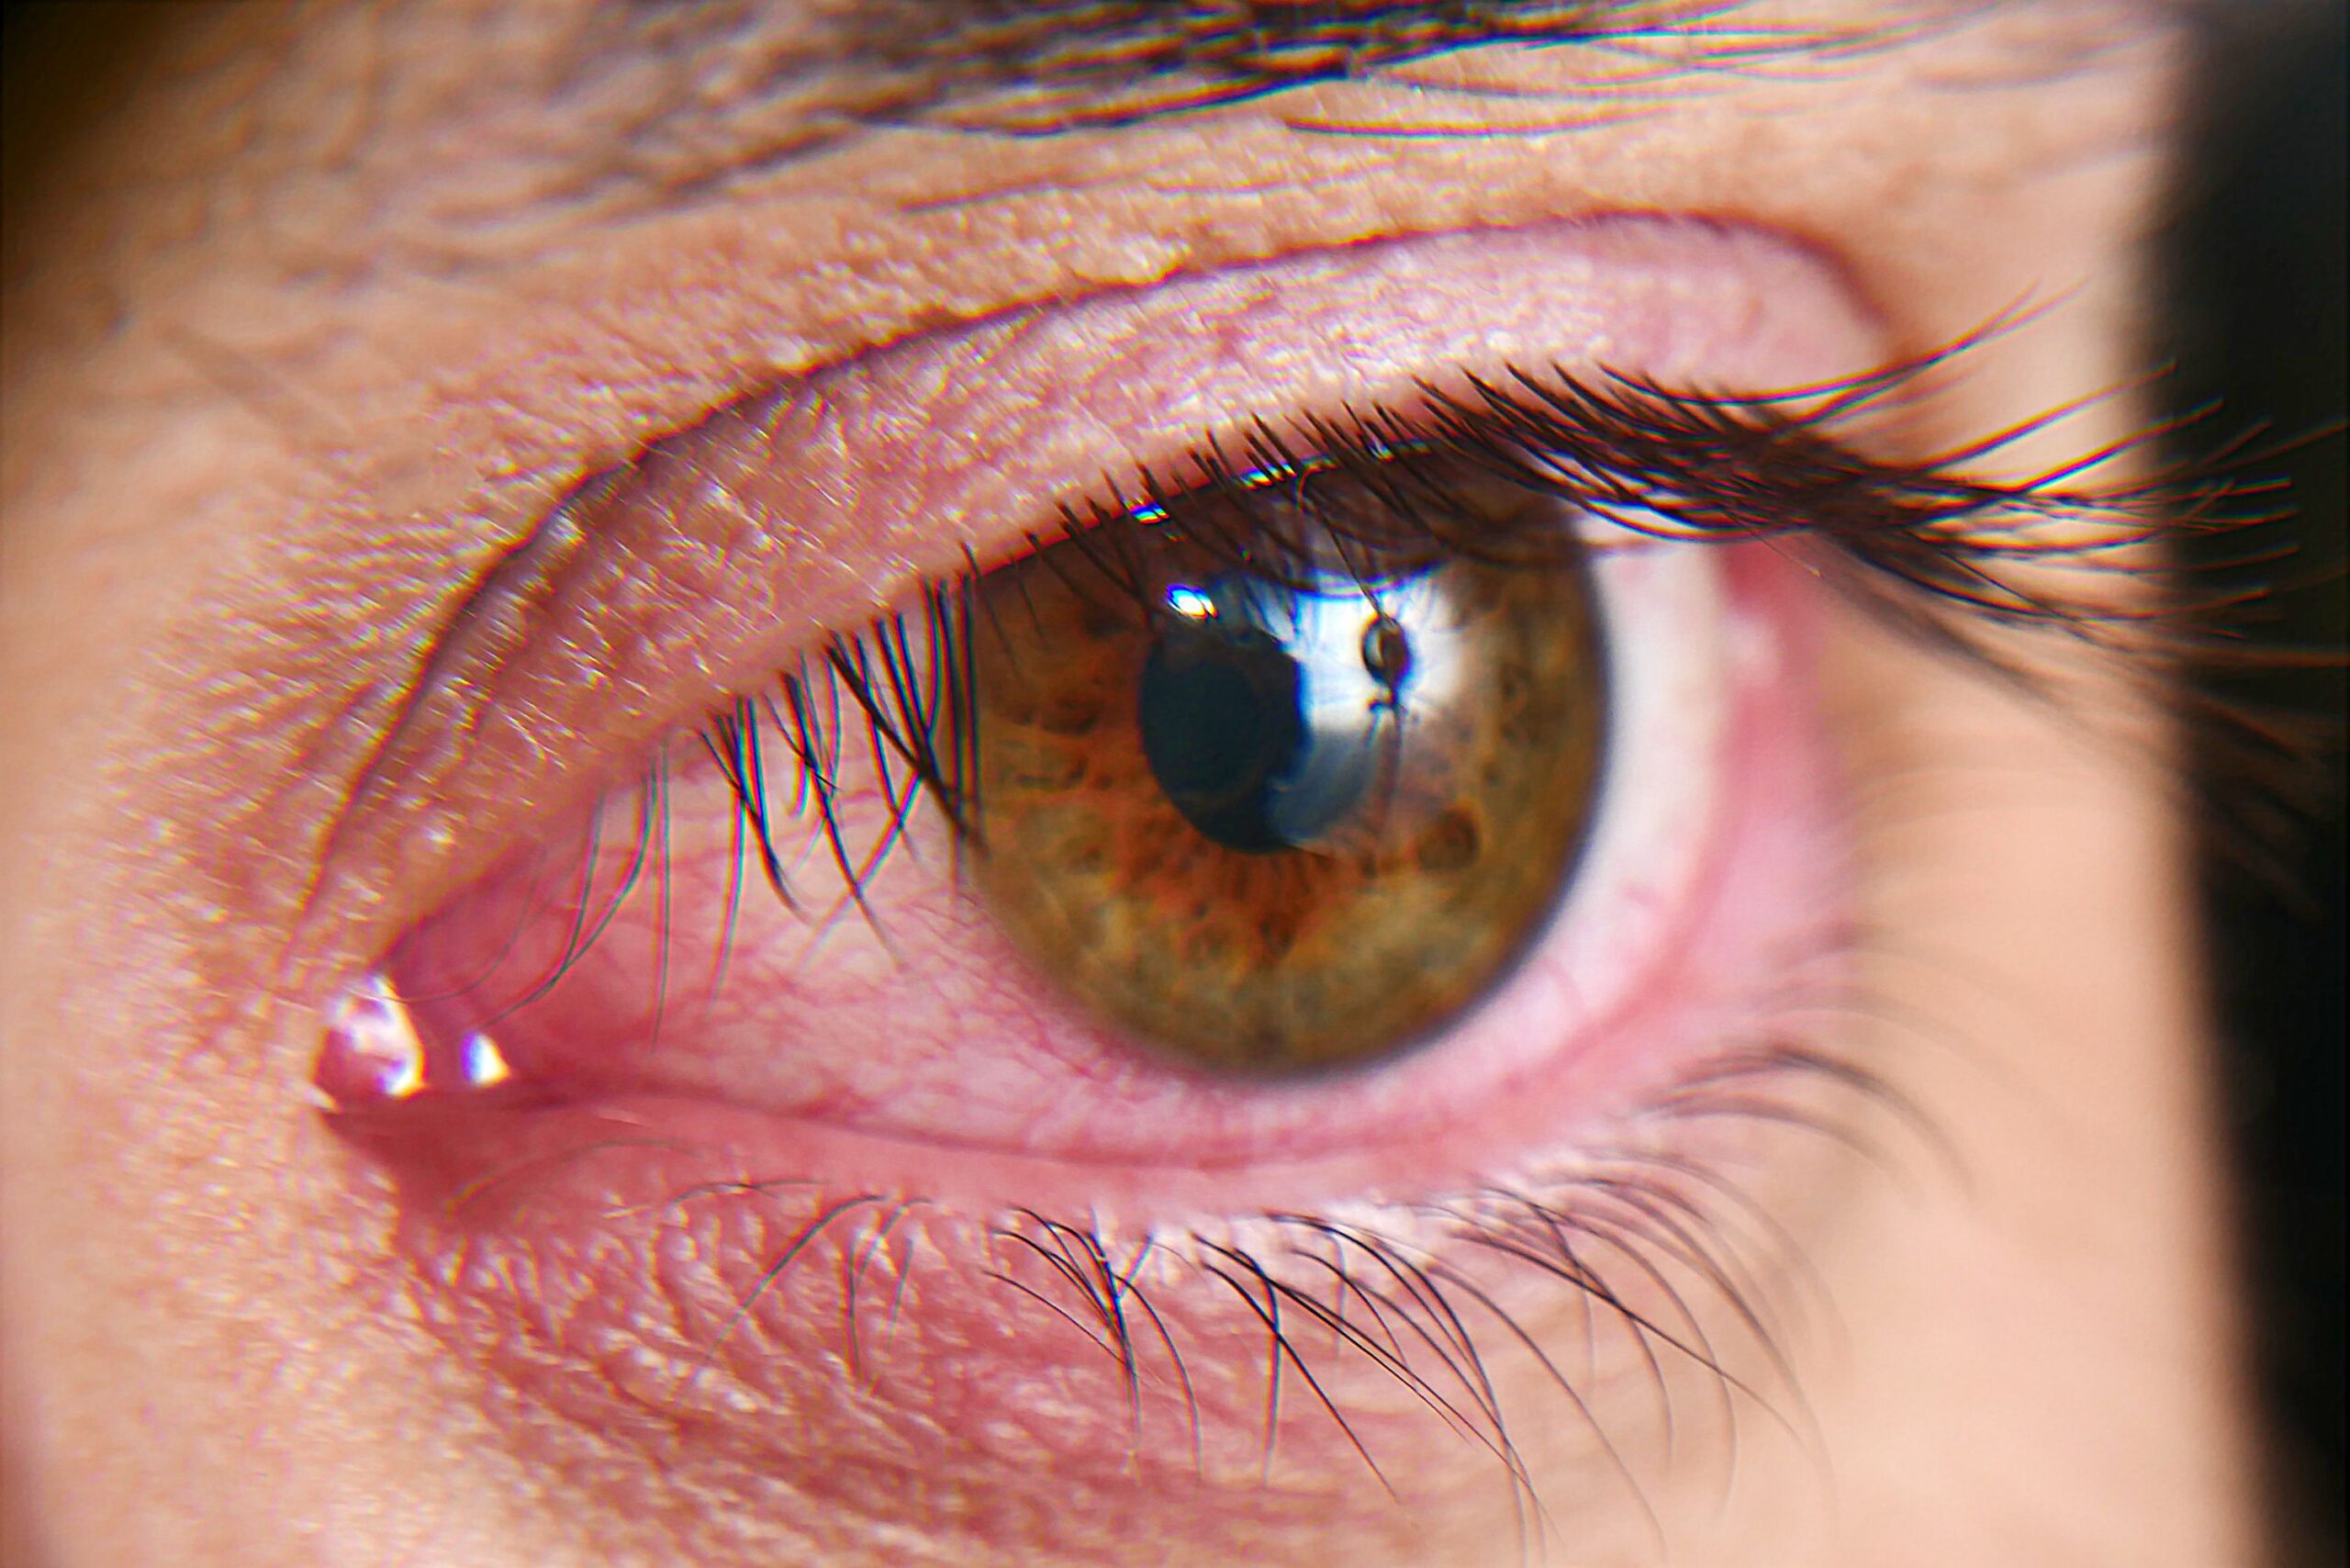 Dry eyes syndrome